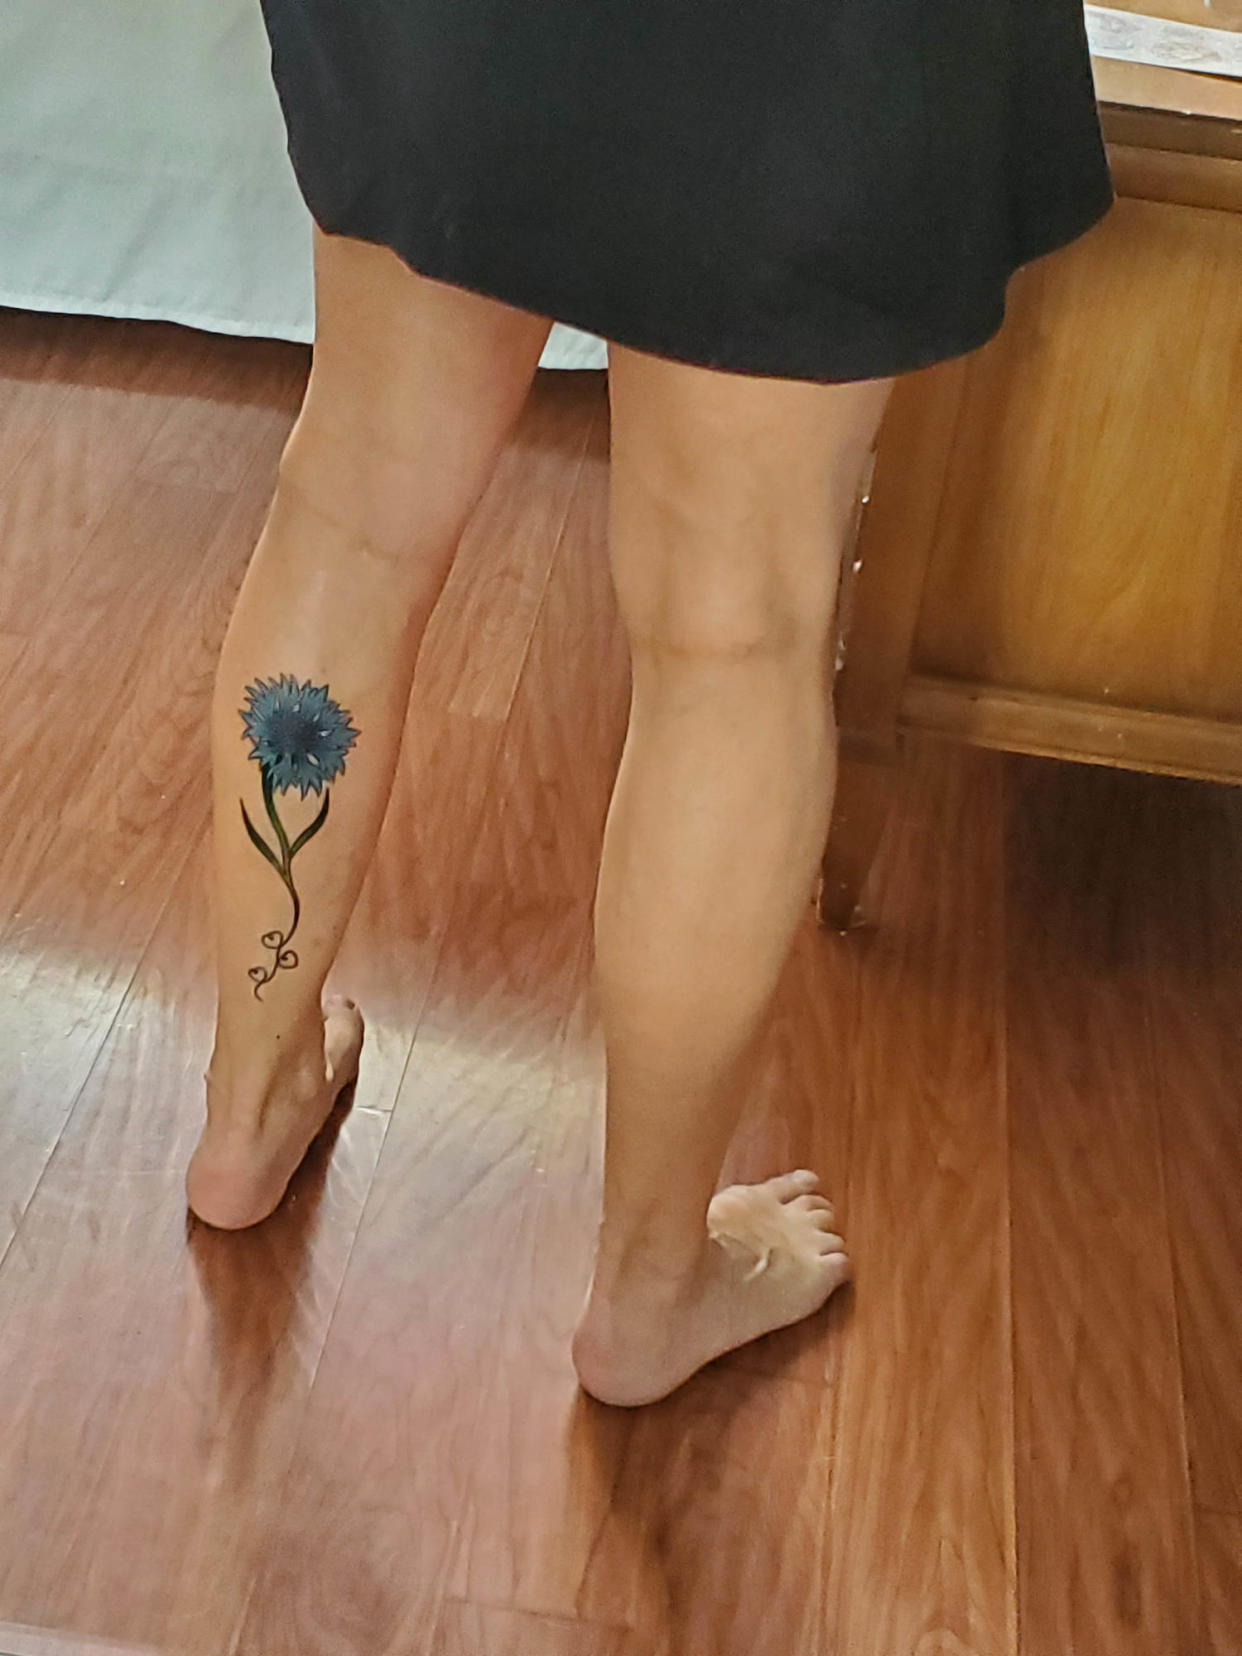 Melania Murphy's tattoo of a flower on her calf. (Courtesy Melania Murphy)